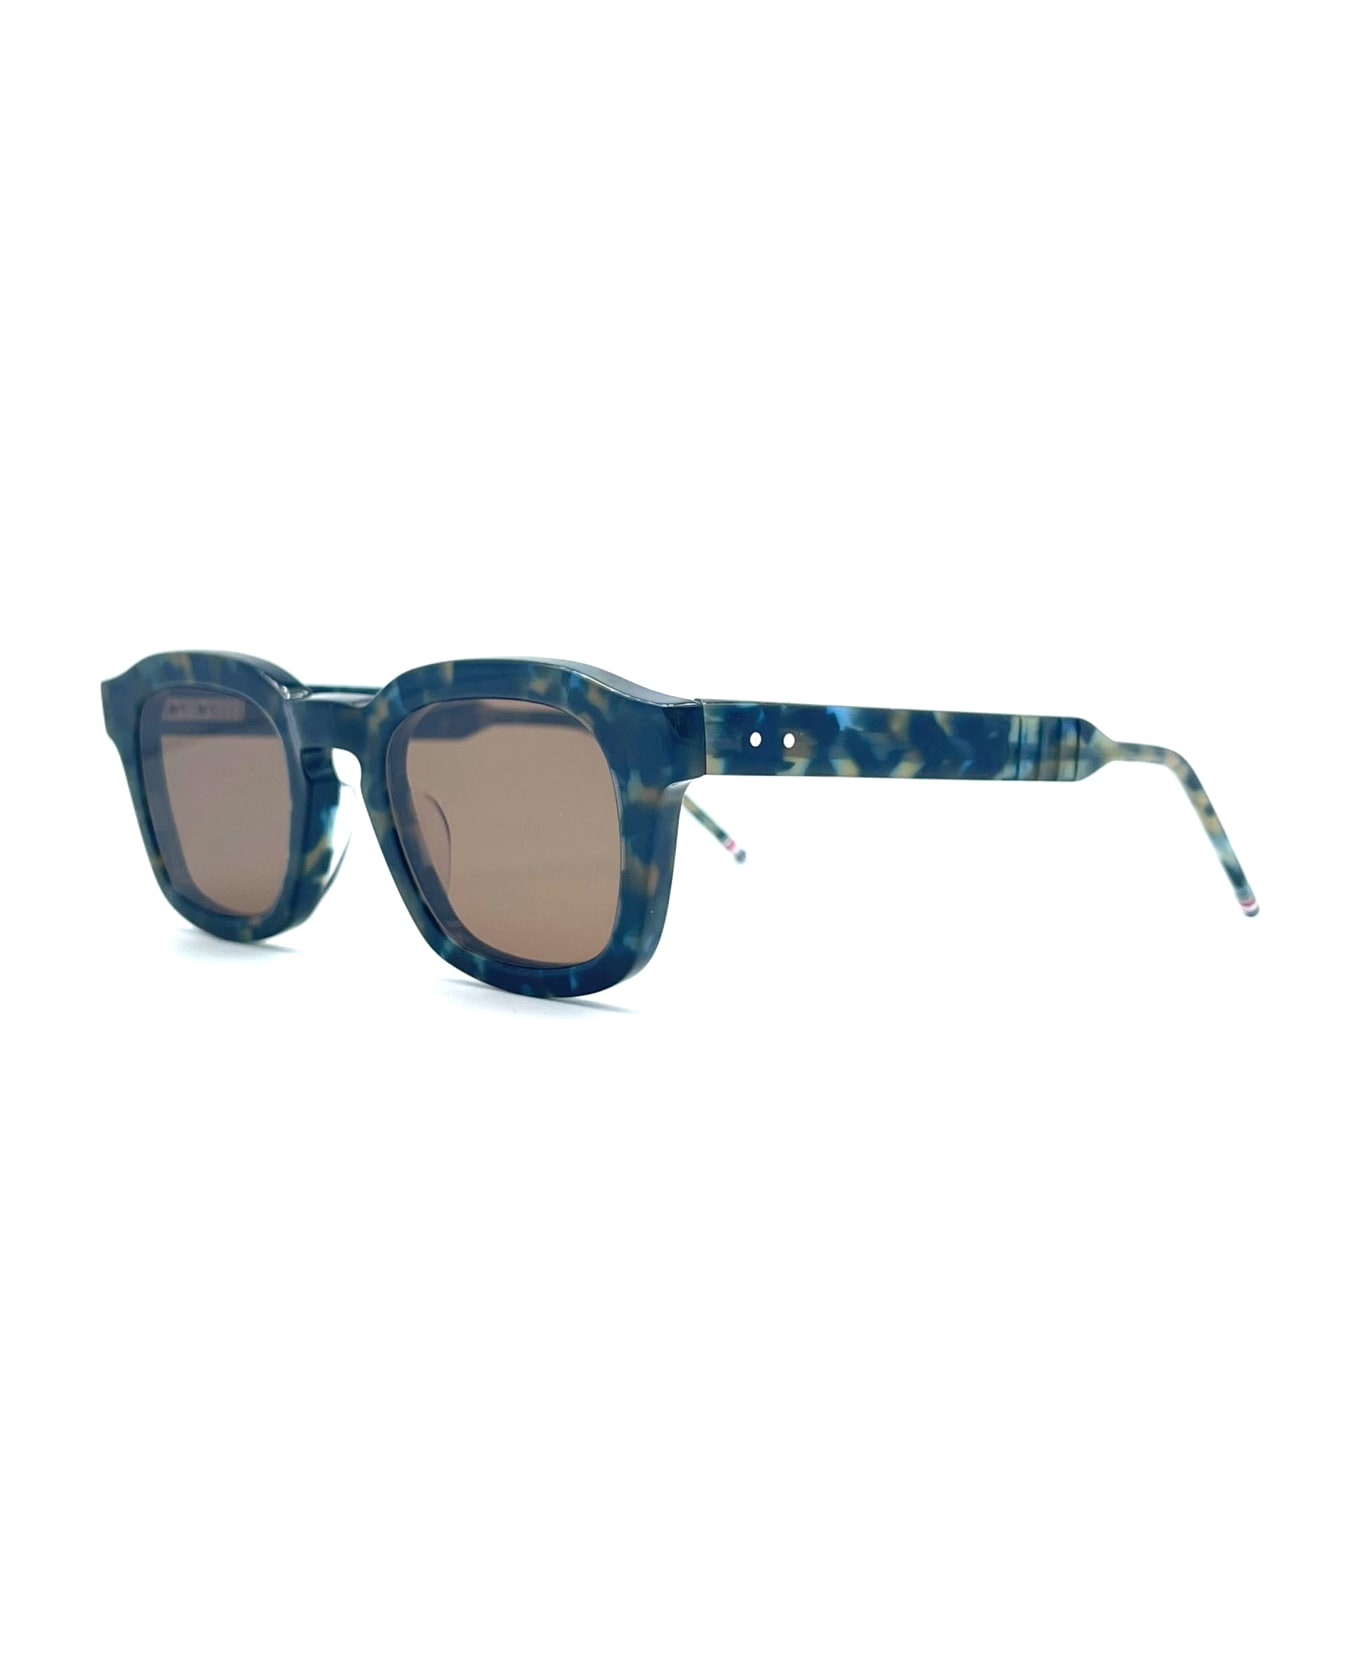 Thom Browne Rectangular - Navy Melange Sunglasses - navy blue